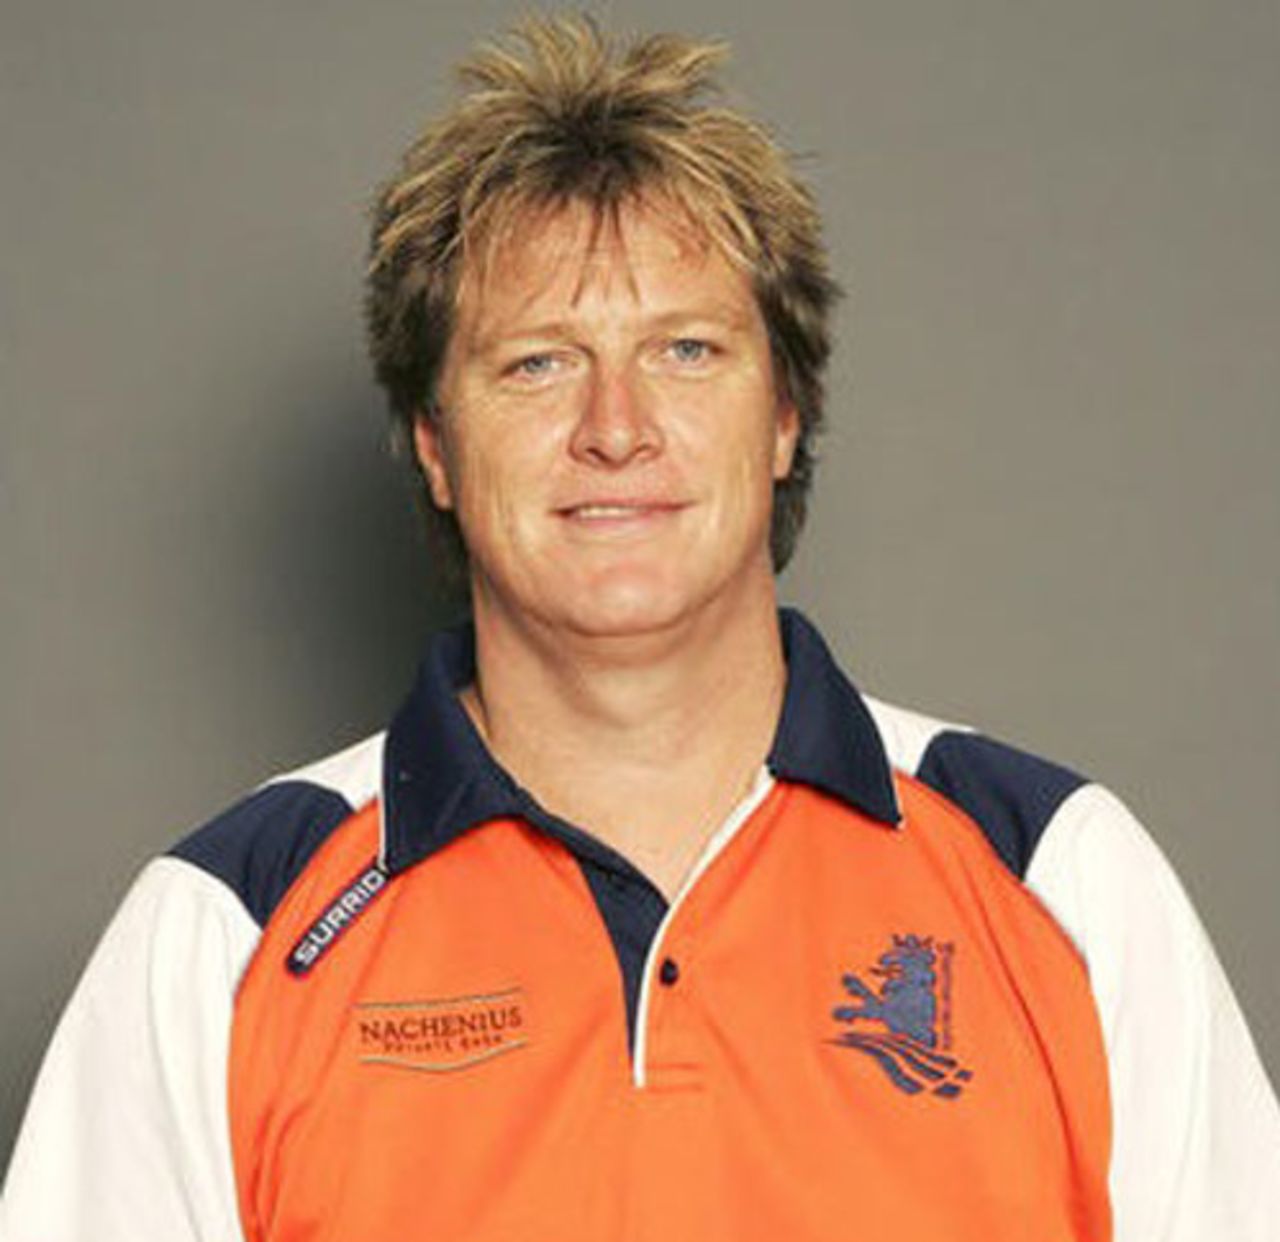 Former Essex fast bowler Ian Pont, September 14, 2010